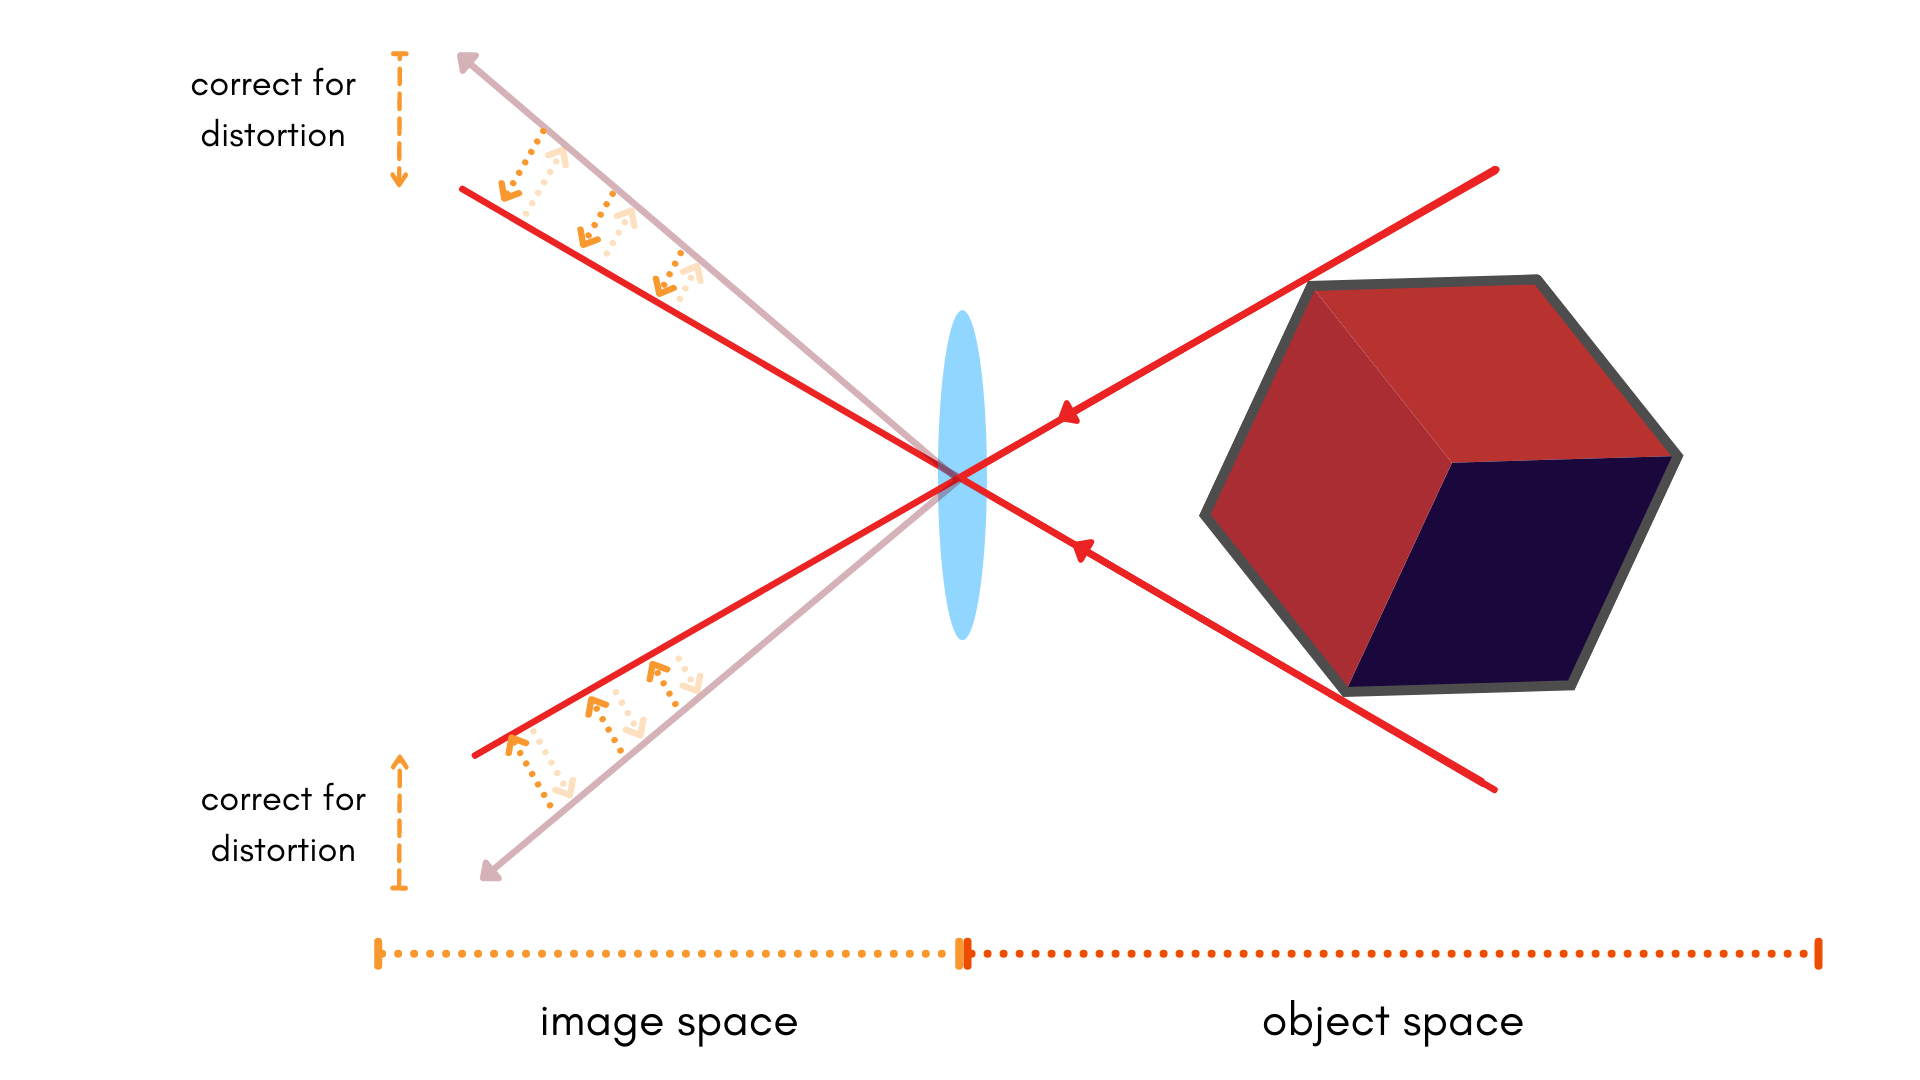 distortion geometry, tangram's model